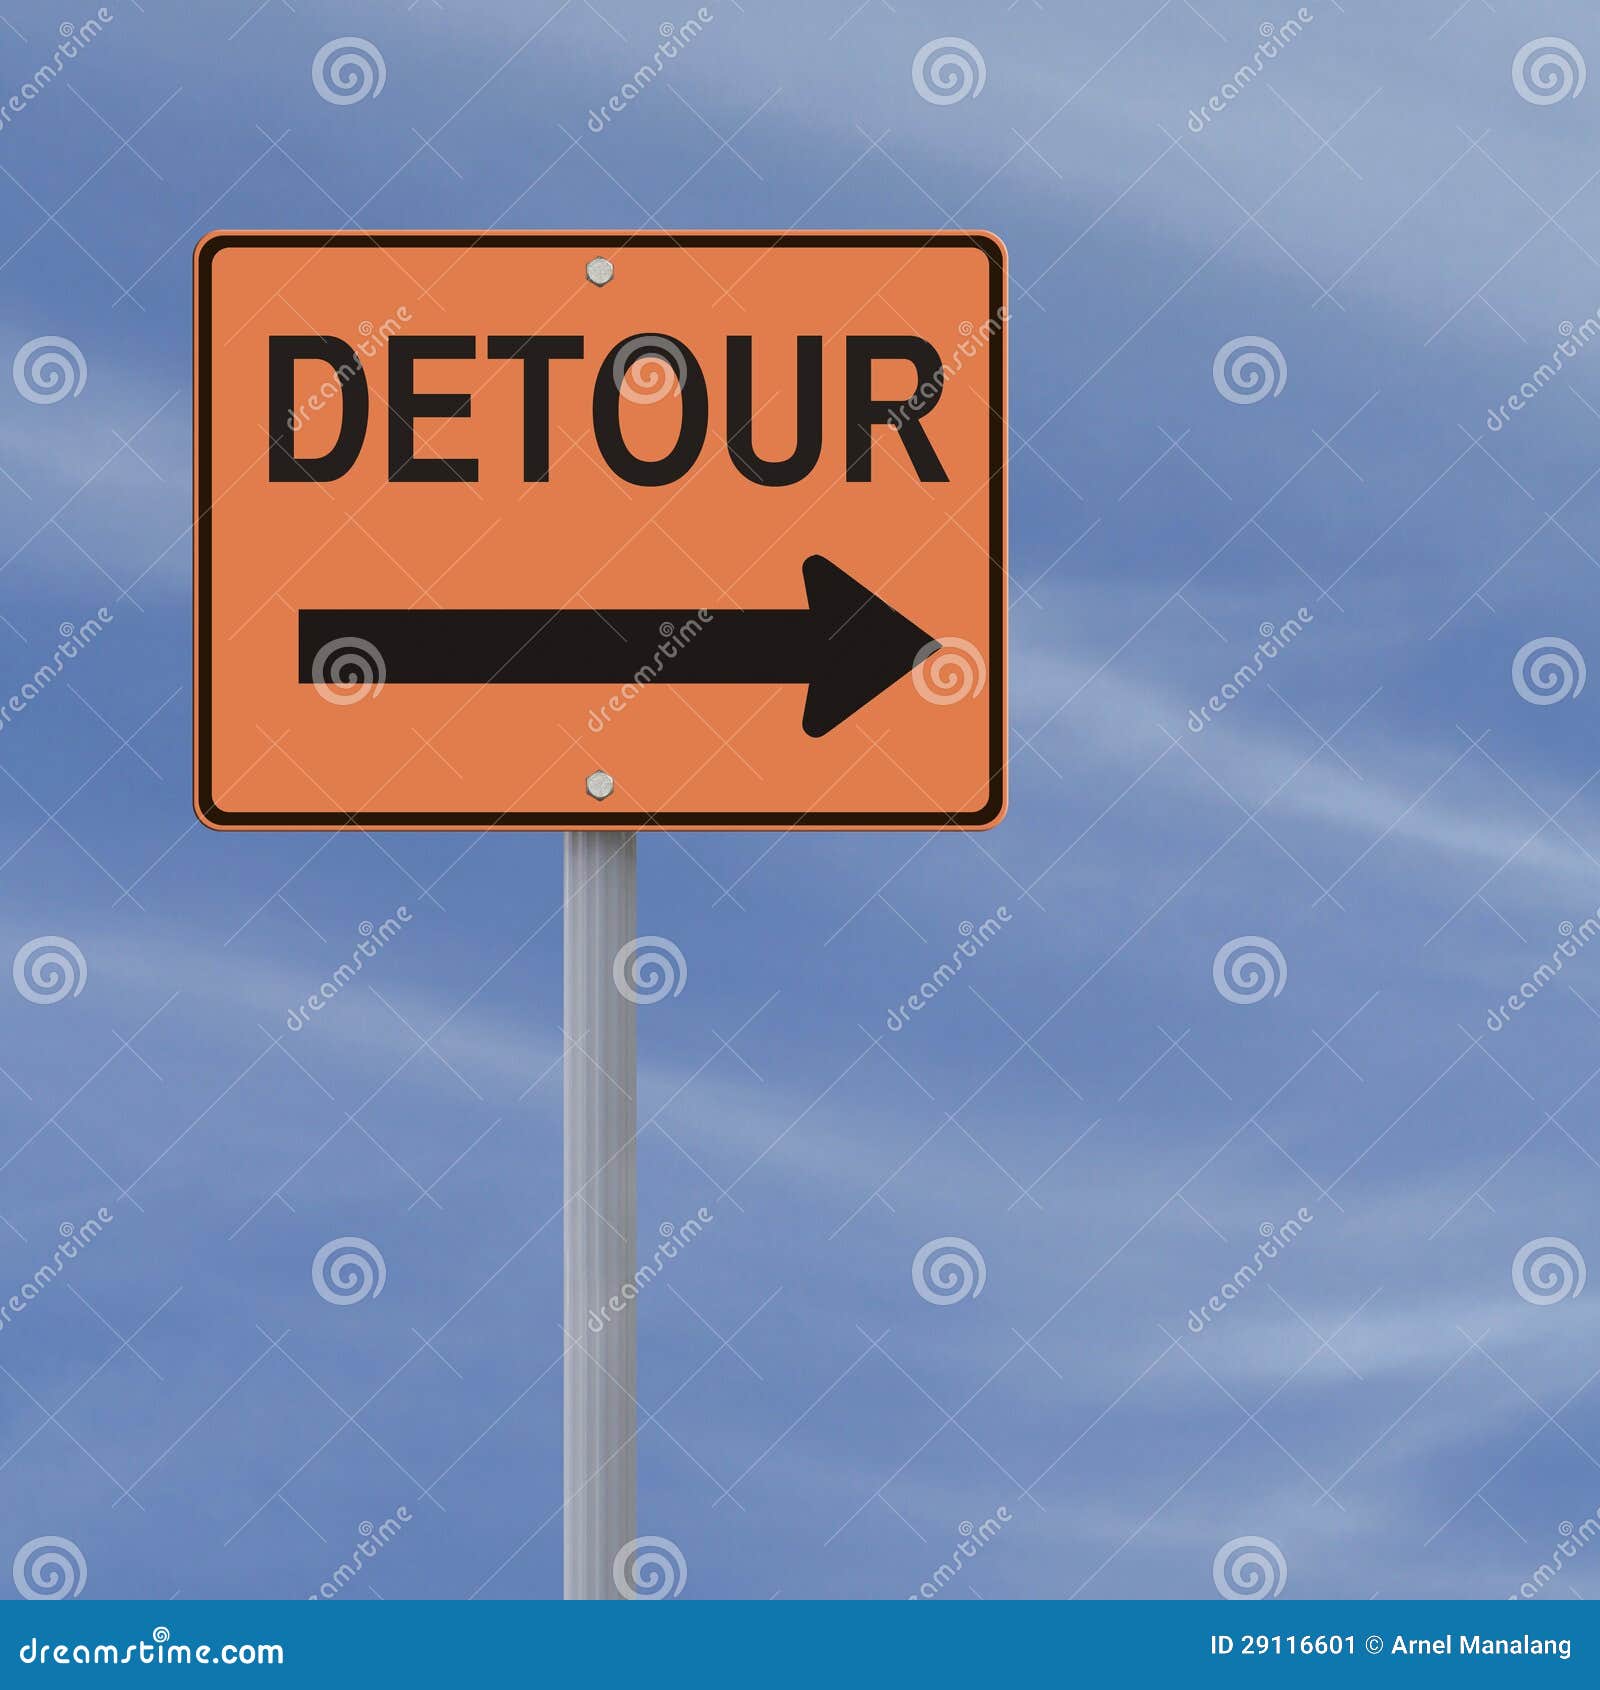 detour road sign